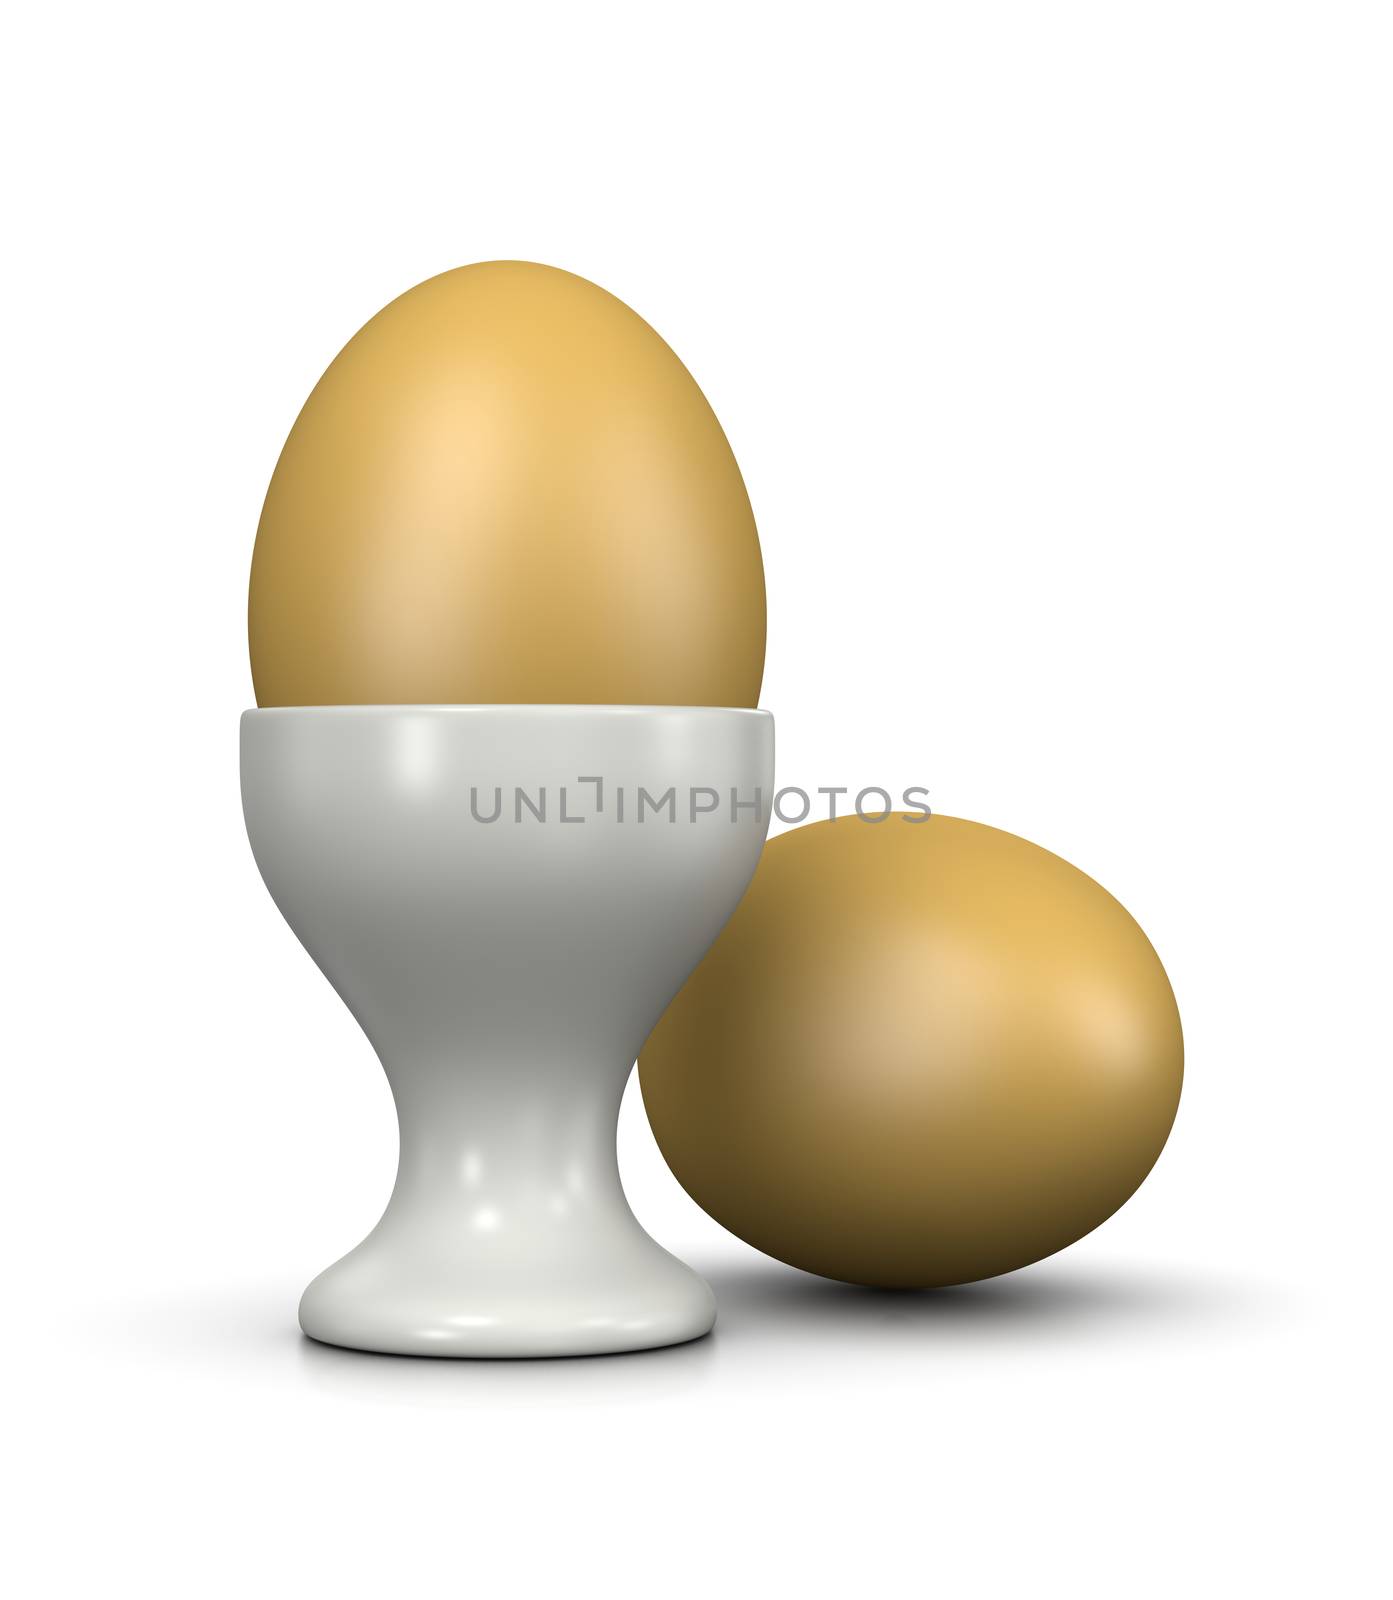 White Egg Cup with Egg on White Background 3D Illustration